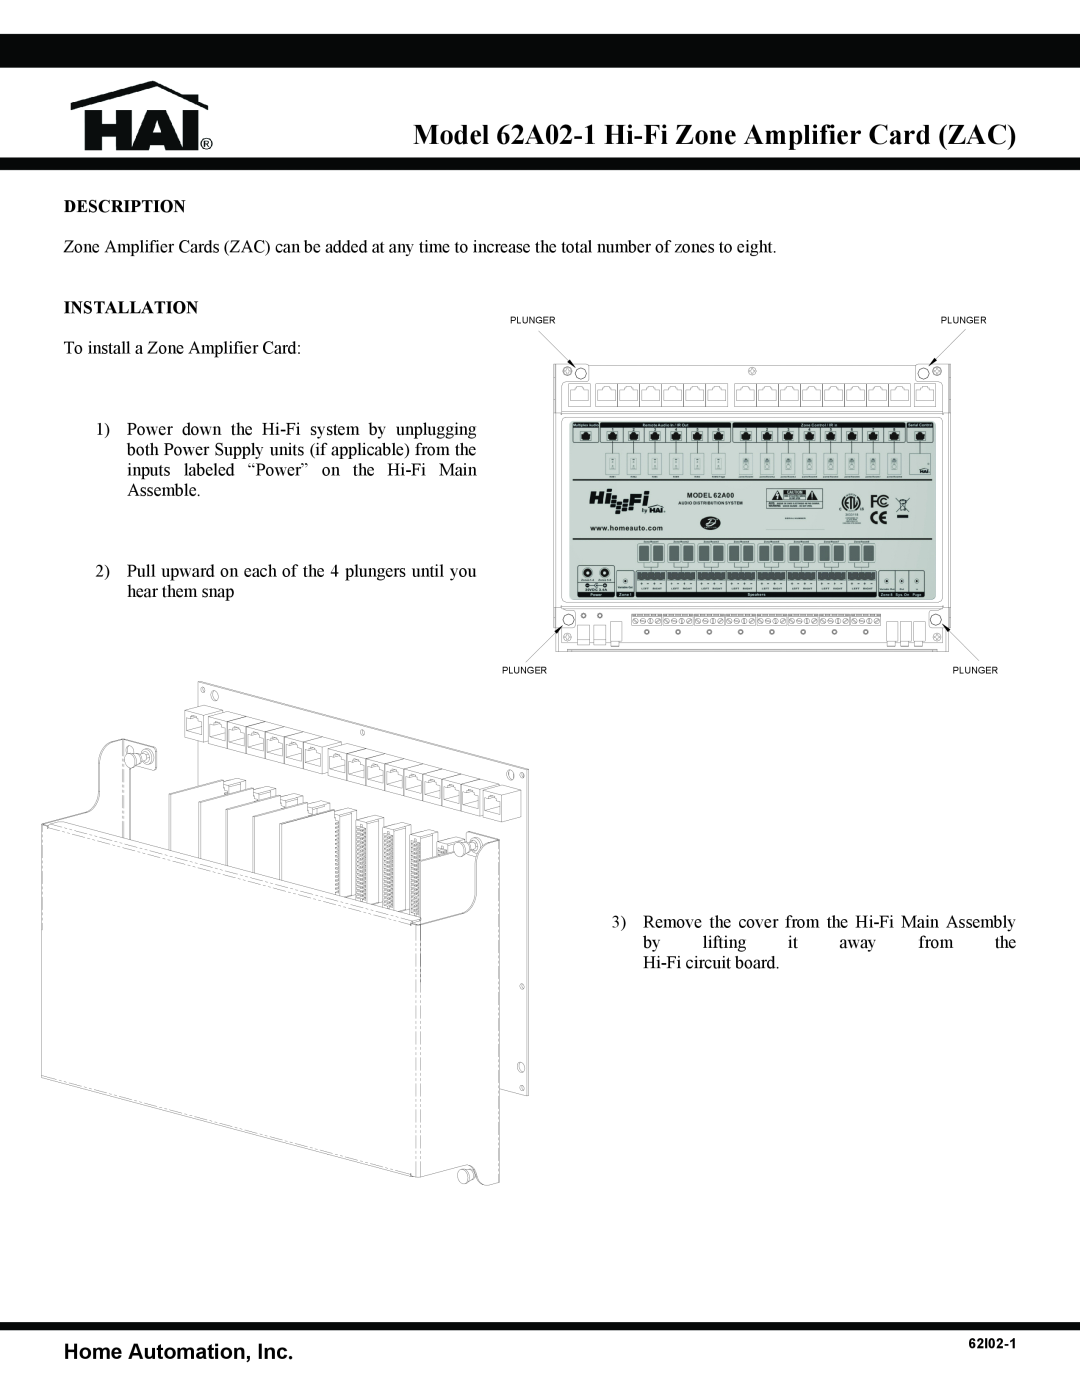 Home Automation manual Description, Installation, Model 62A02-1 Hi-FiZone Amplifier Card ZAC, Home Automation, Inc 